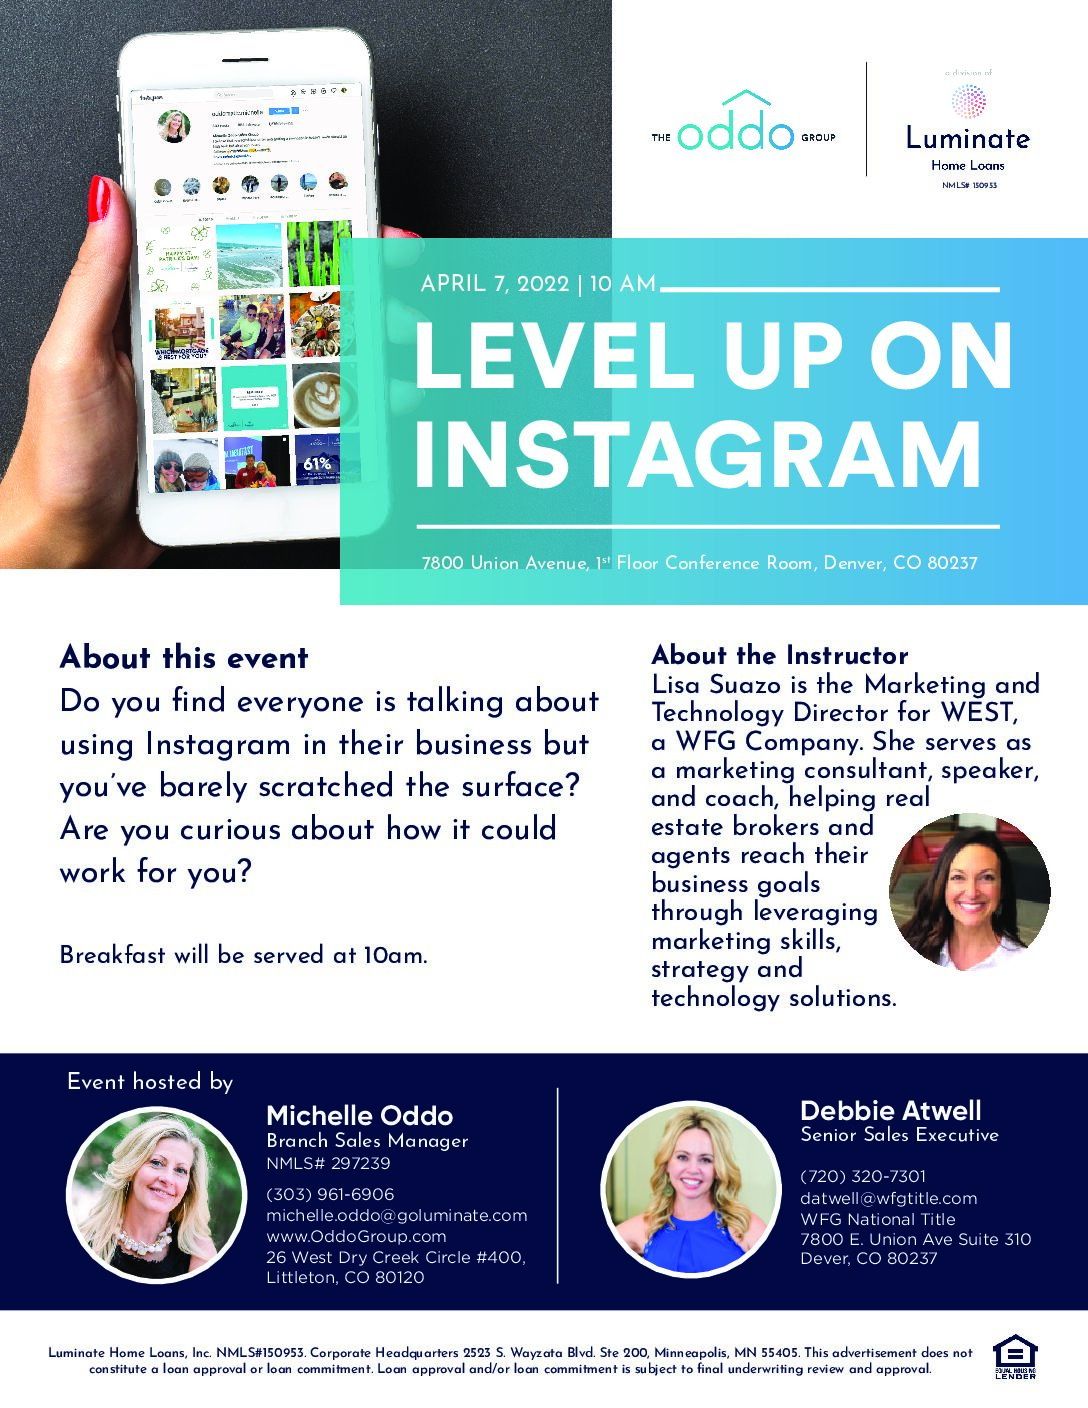 Level Up On Instagram Event Oddo Group Mortgage Lender